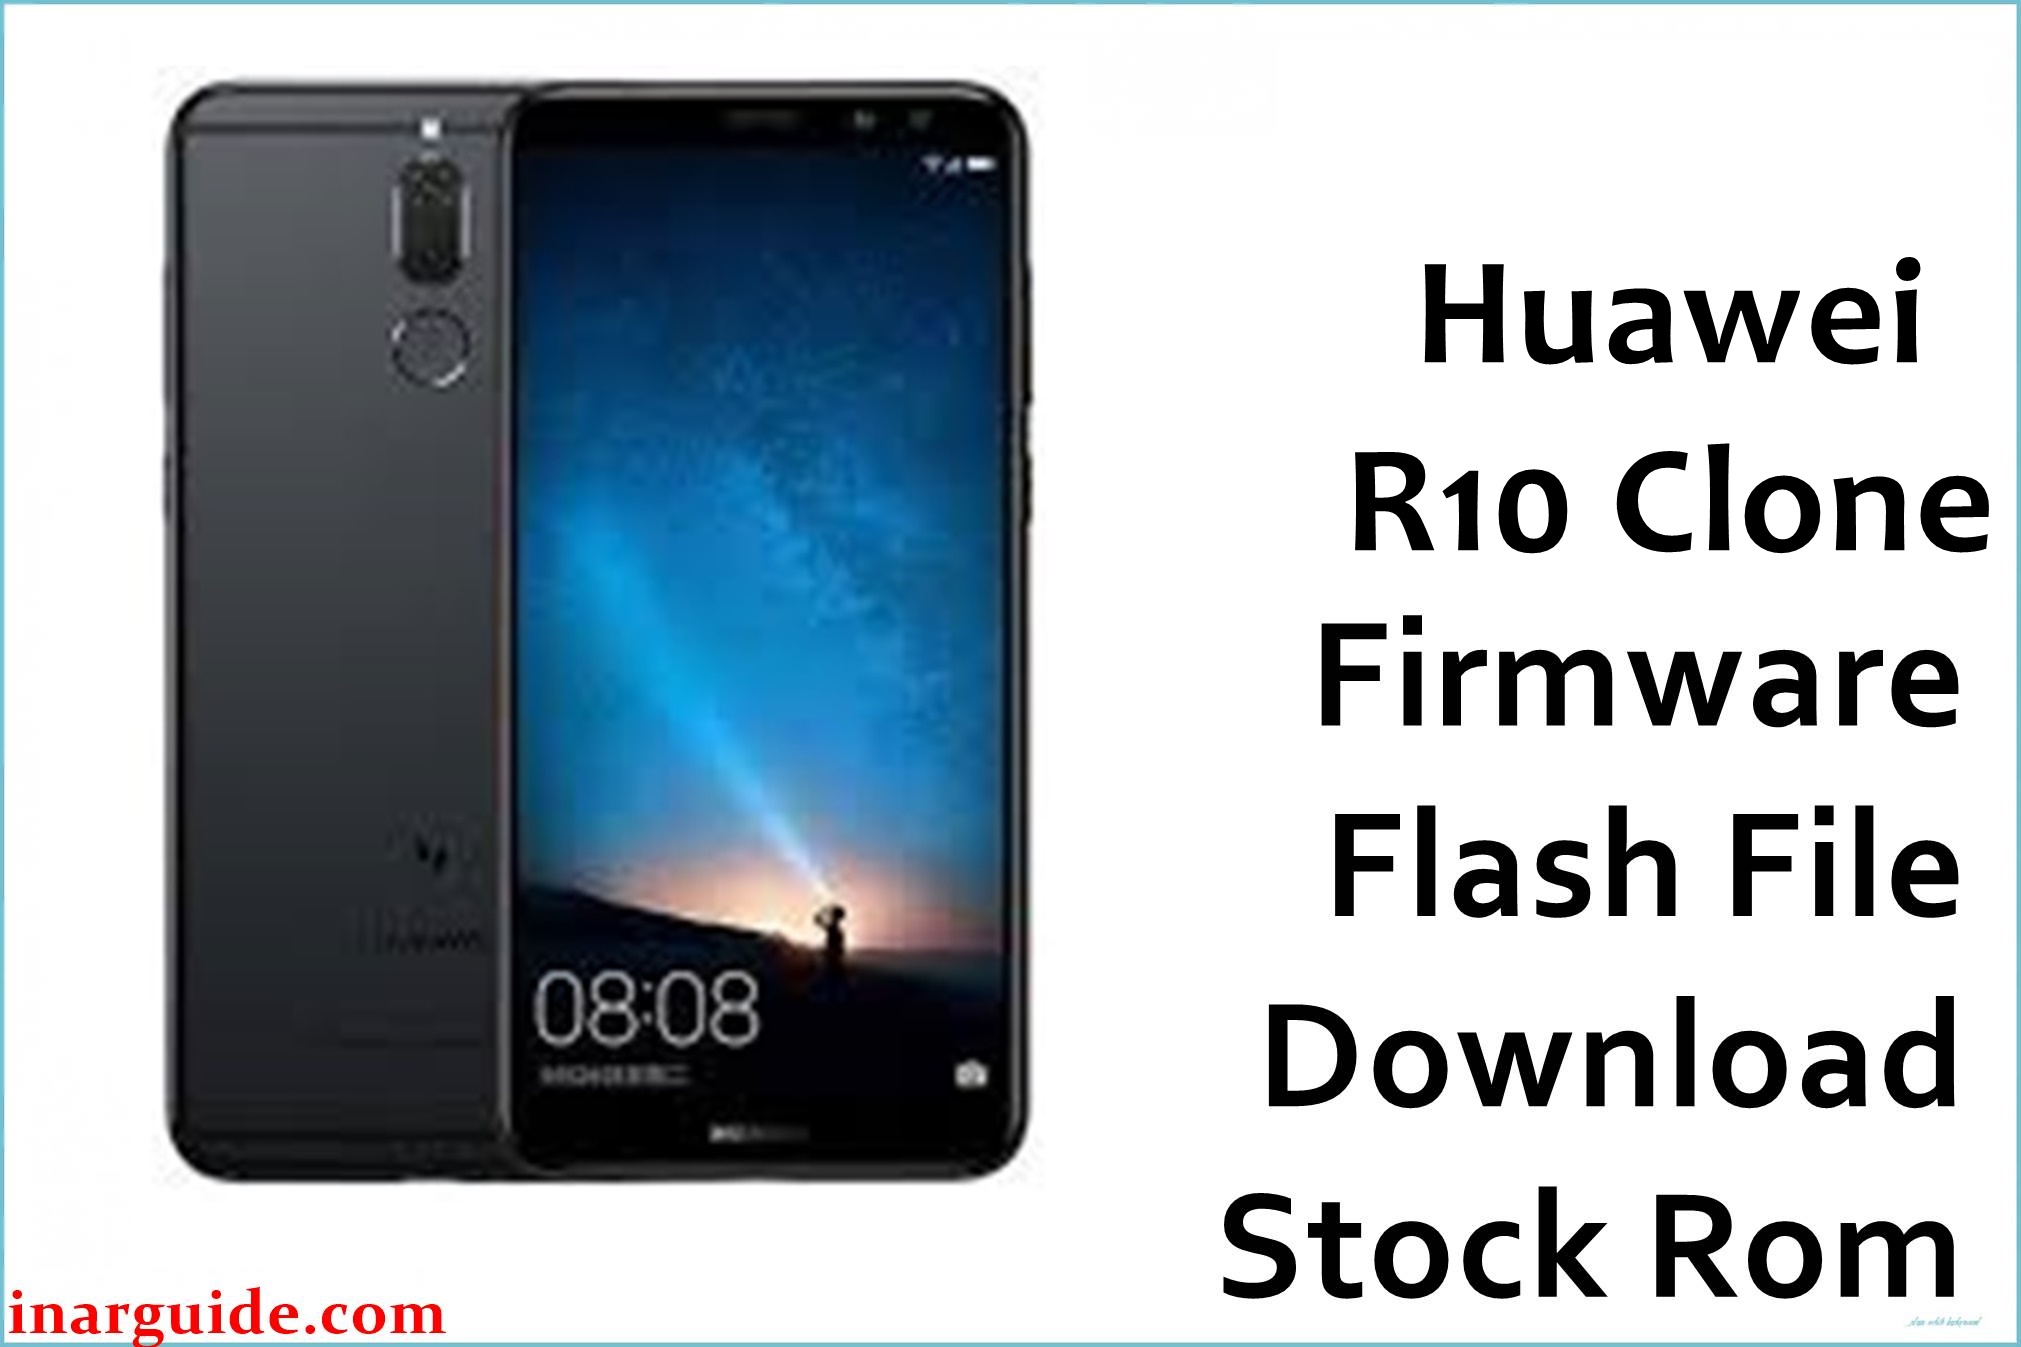 Huawei R10 Clone